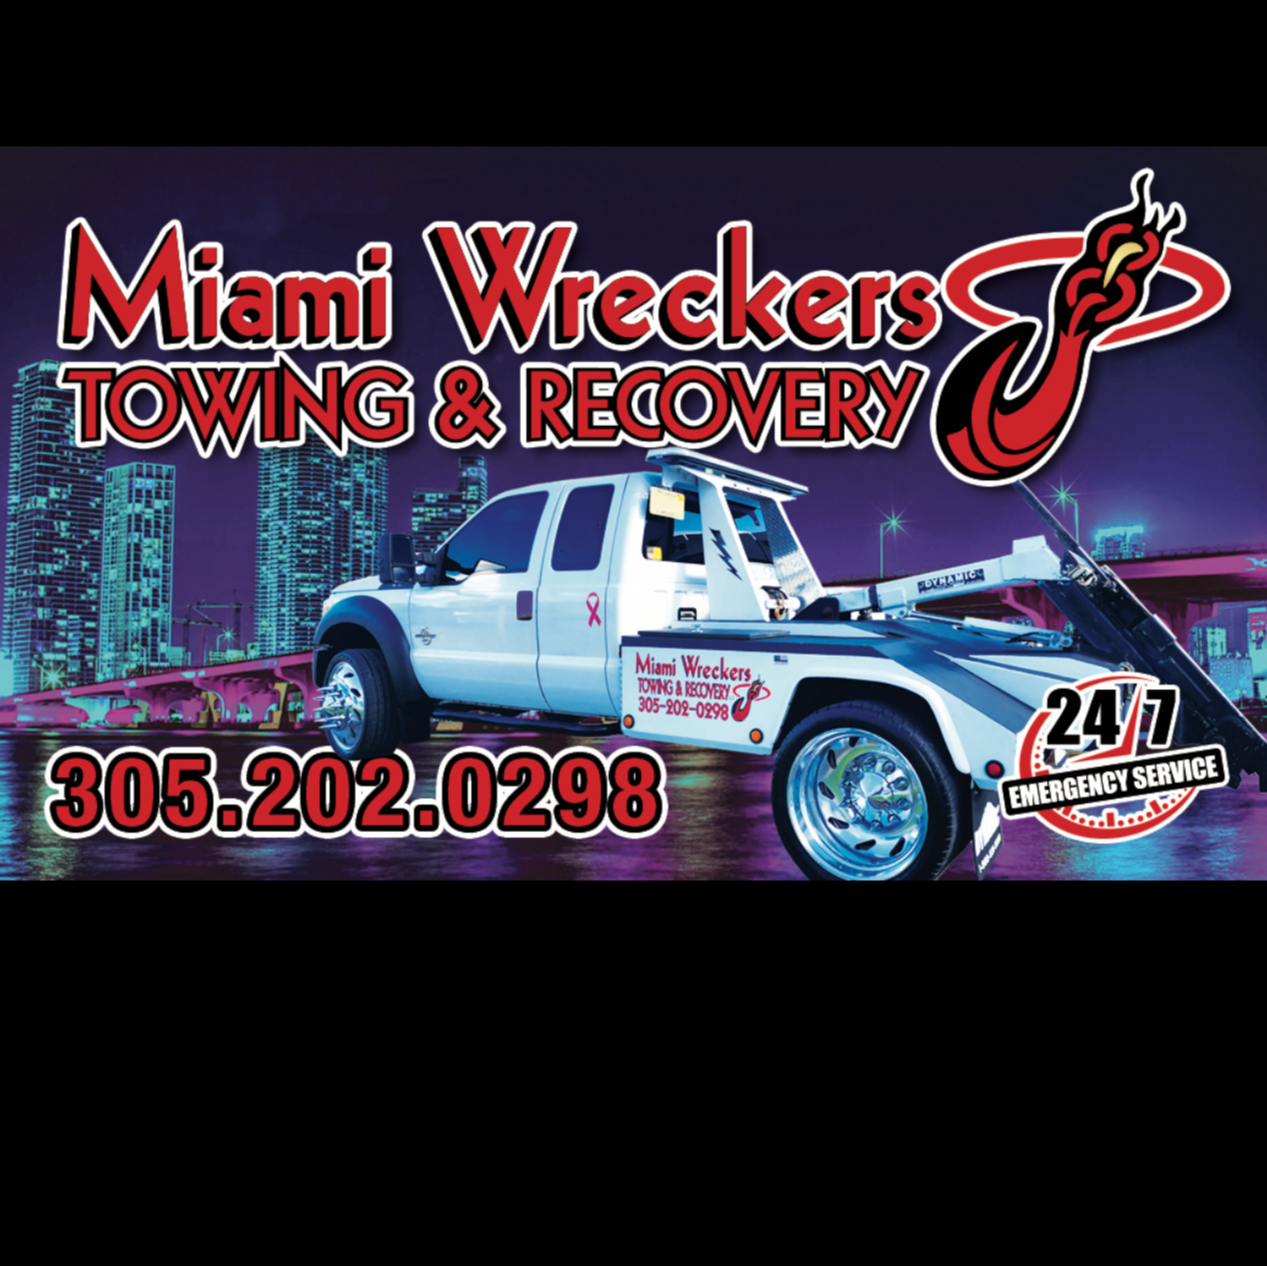 Miami Wrecker’s Towing & Recovery logo